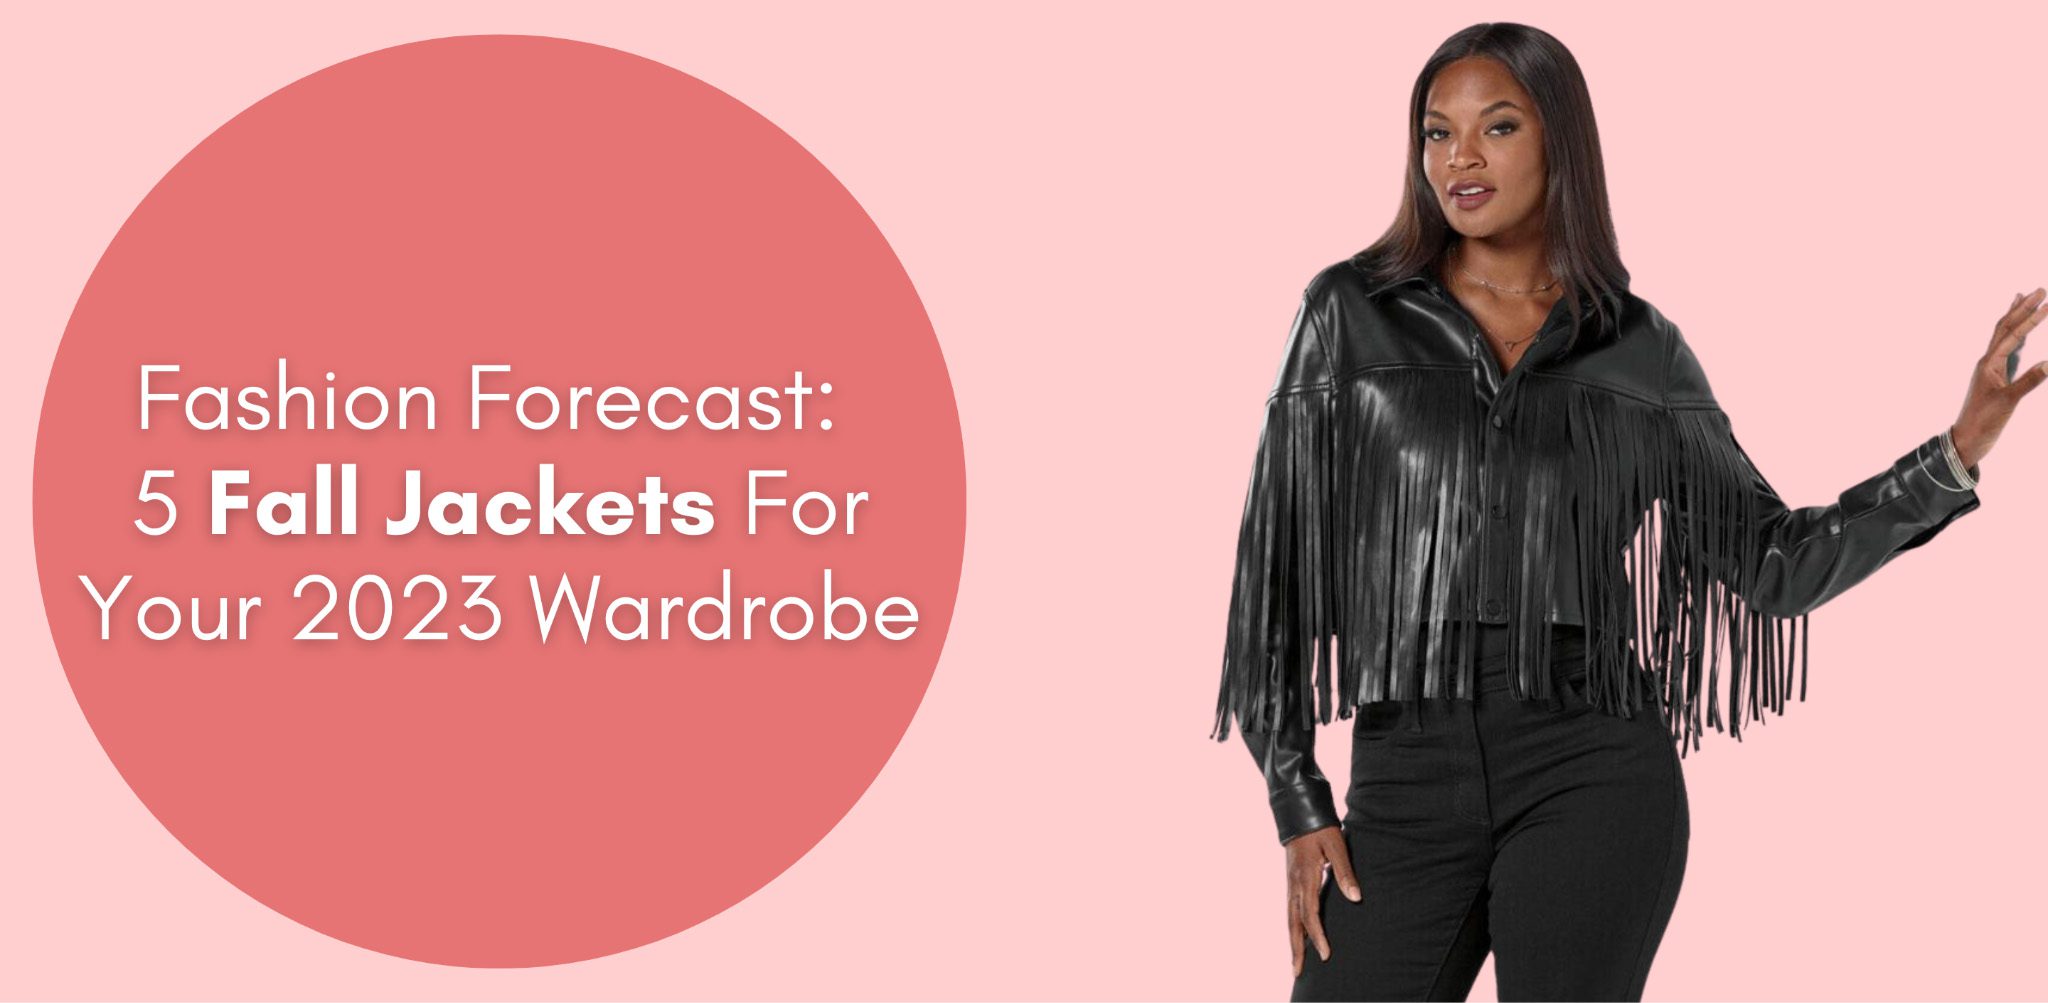 Fashion Forecast: 5 Fall Jackets For Your 2023 Wardrobe